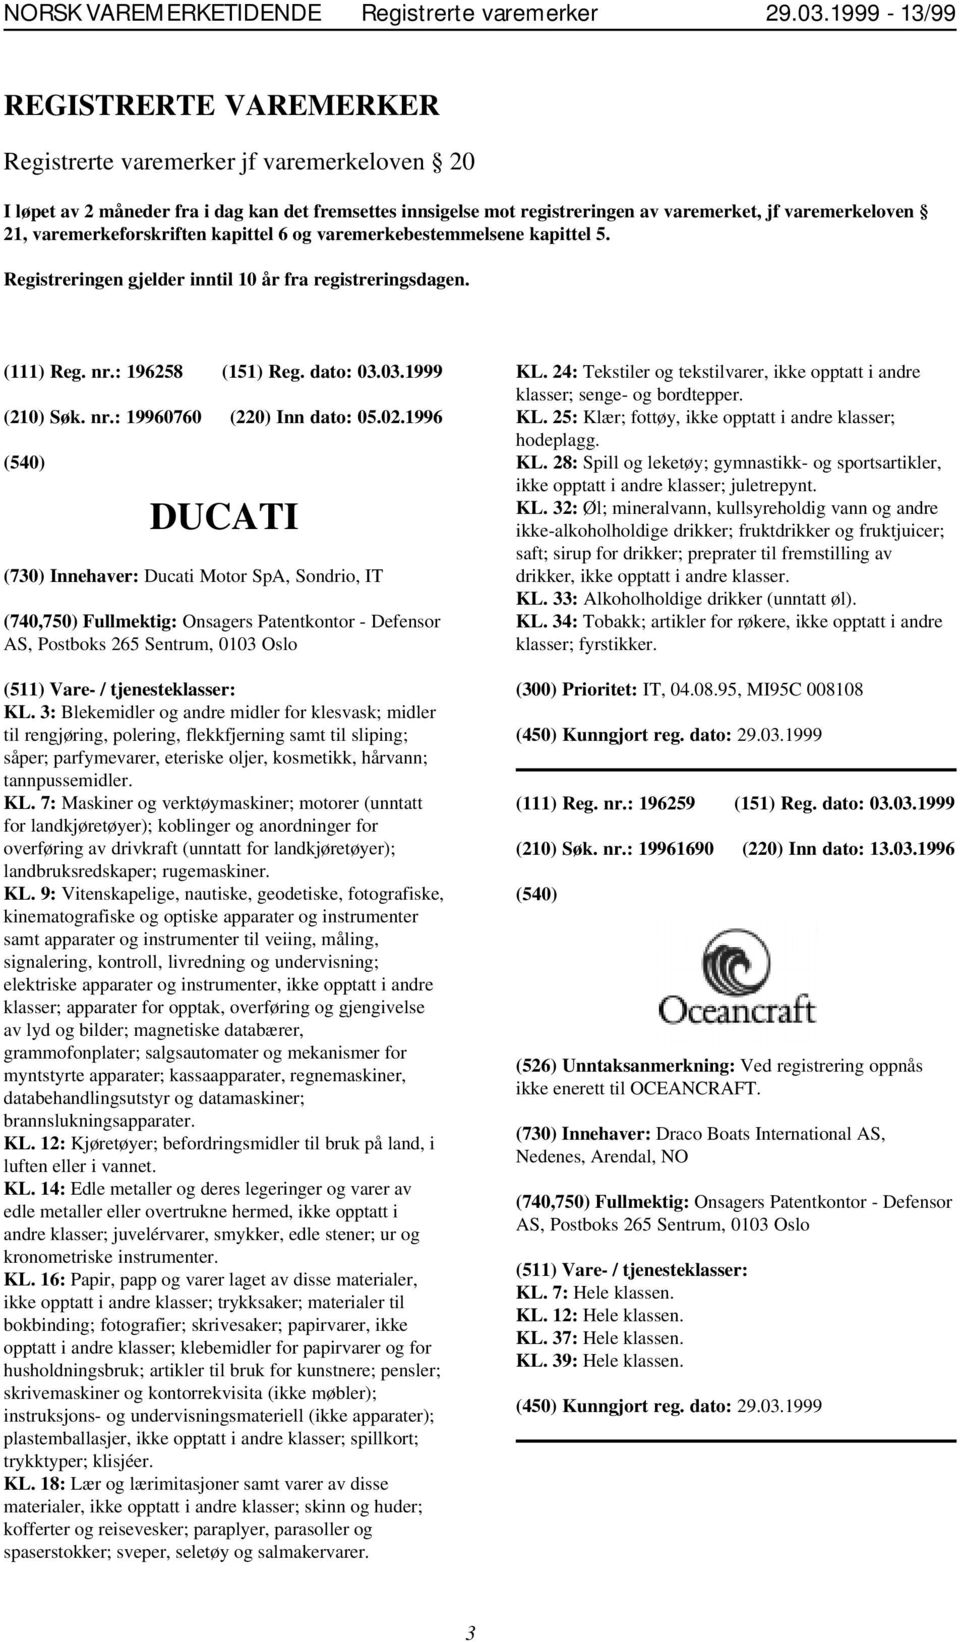 02.1996 DUCATI (730) Innehaver: Ducati Motor SpA, Sondrio, IT (740,750) Fullmektig: Onsagers Patentkontor - Defensor AS, Postboks 265 Sentrum, 0103 Oslo KL.